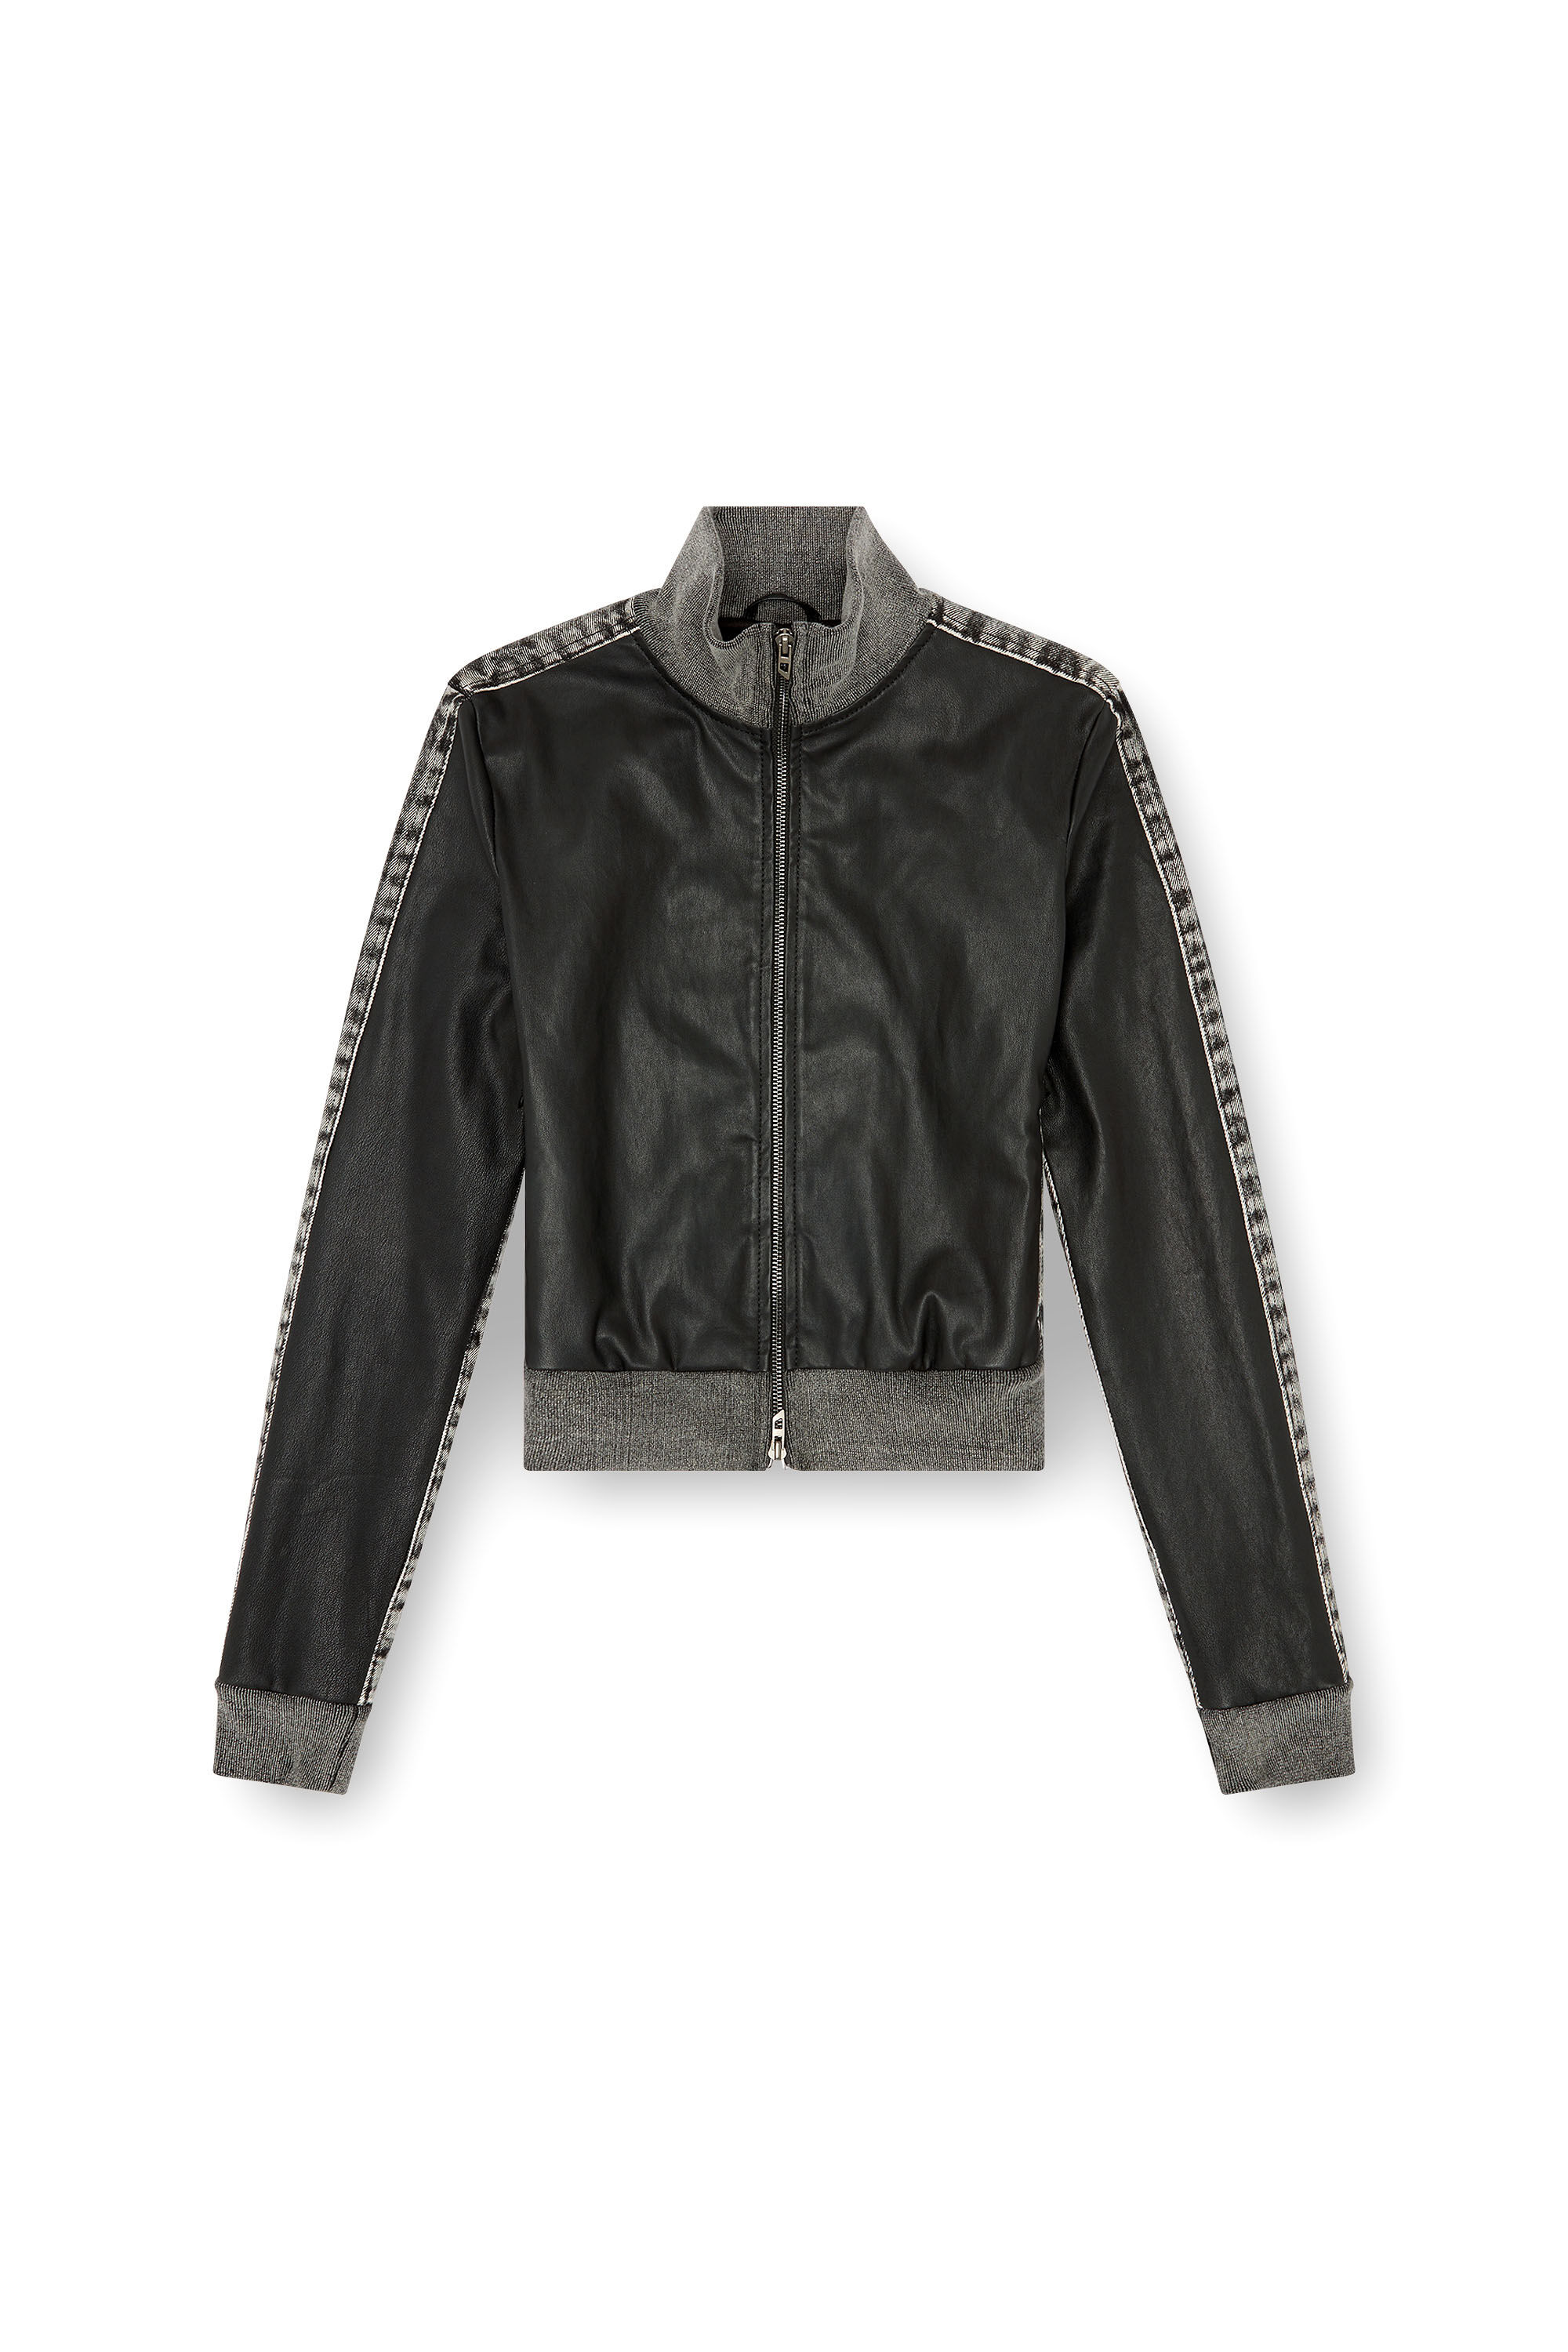 Diesel - L-EADER, Female Hybrid jacket in leather and denim in ブラック - Image 2